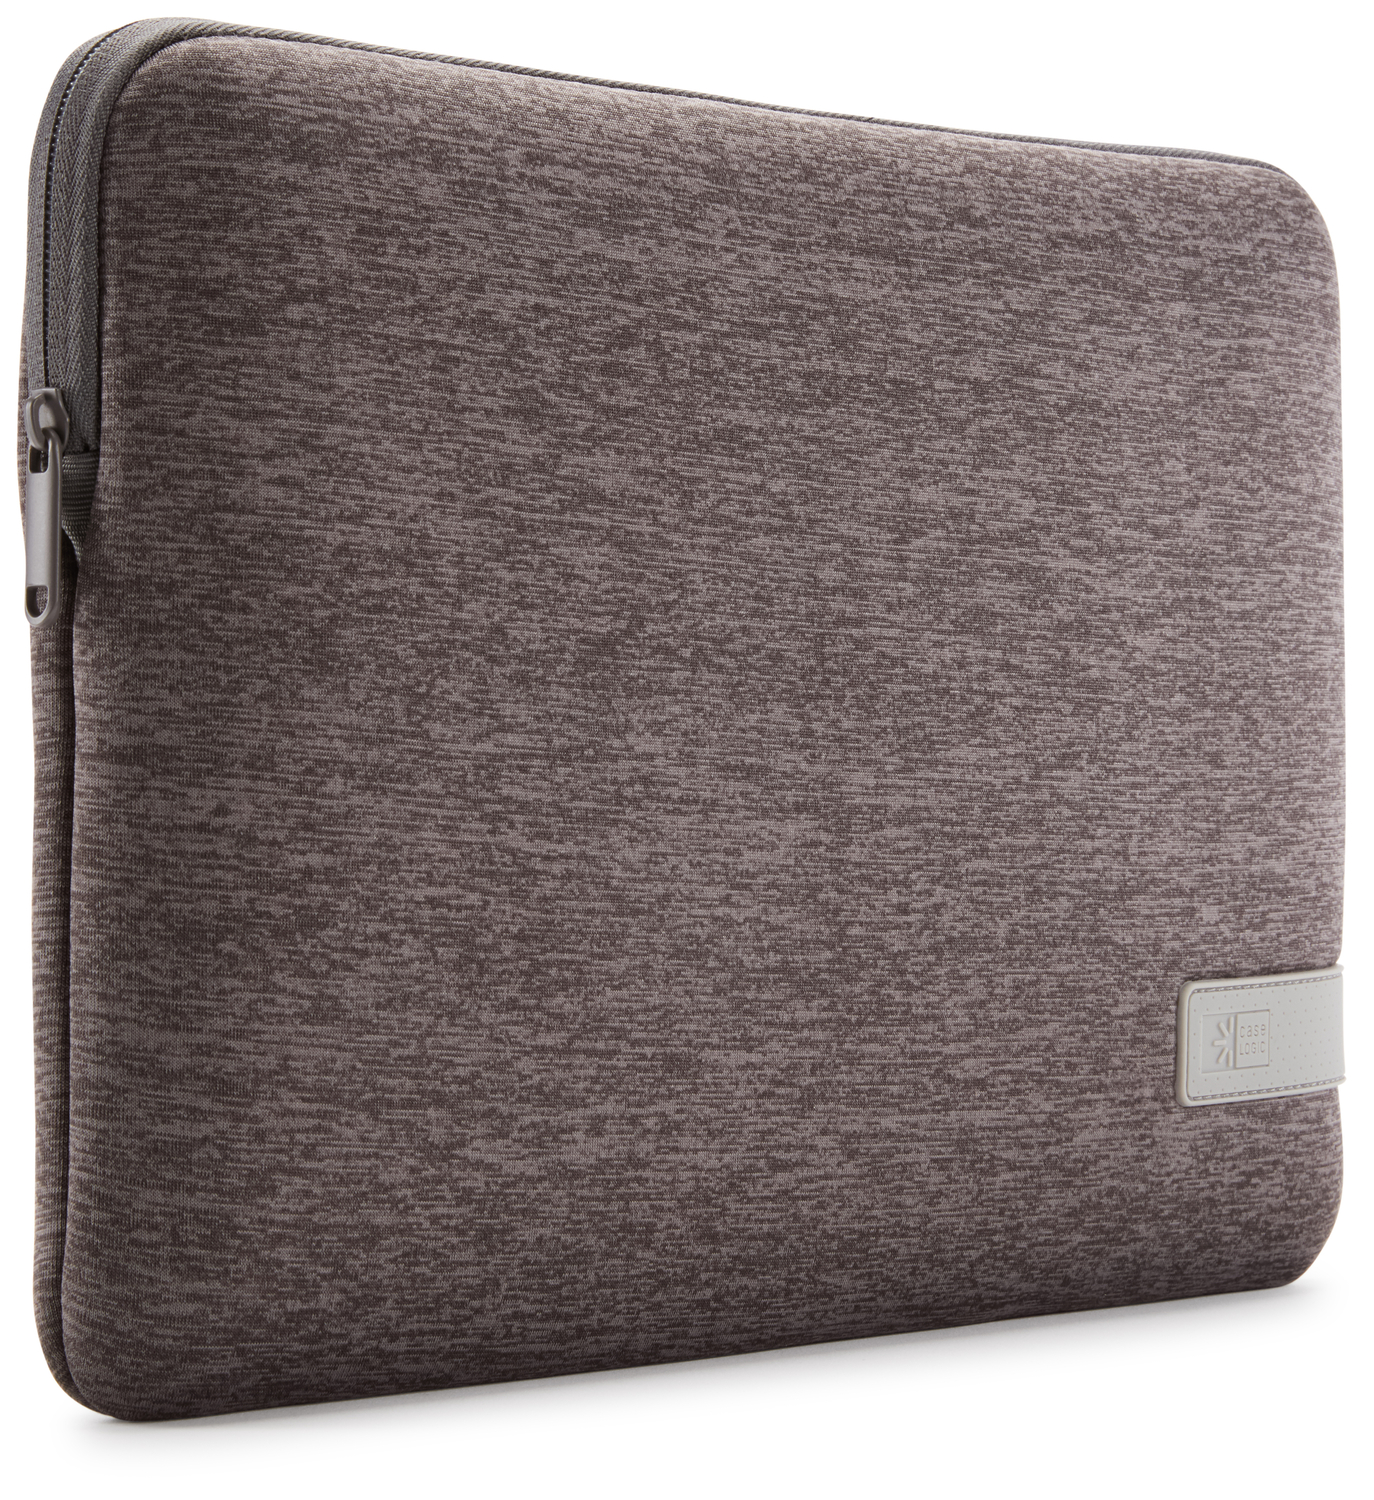 Case Logic Reflect 13 Laptop Sleeve- Gray